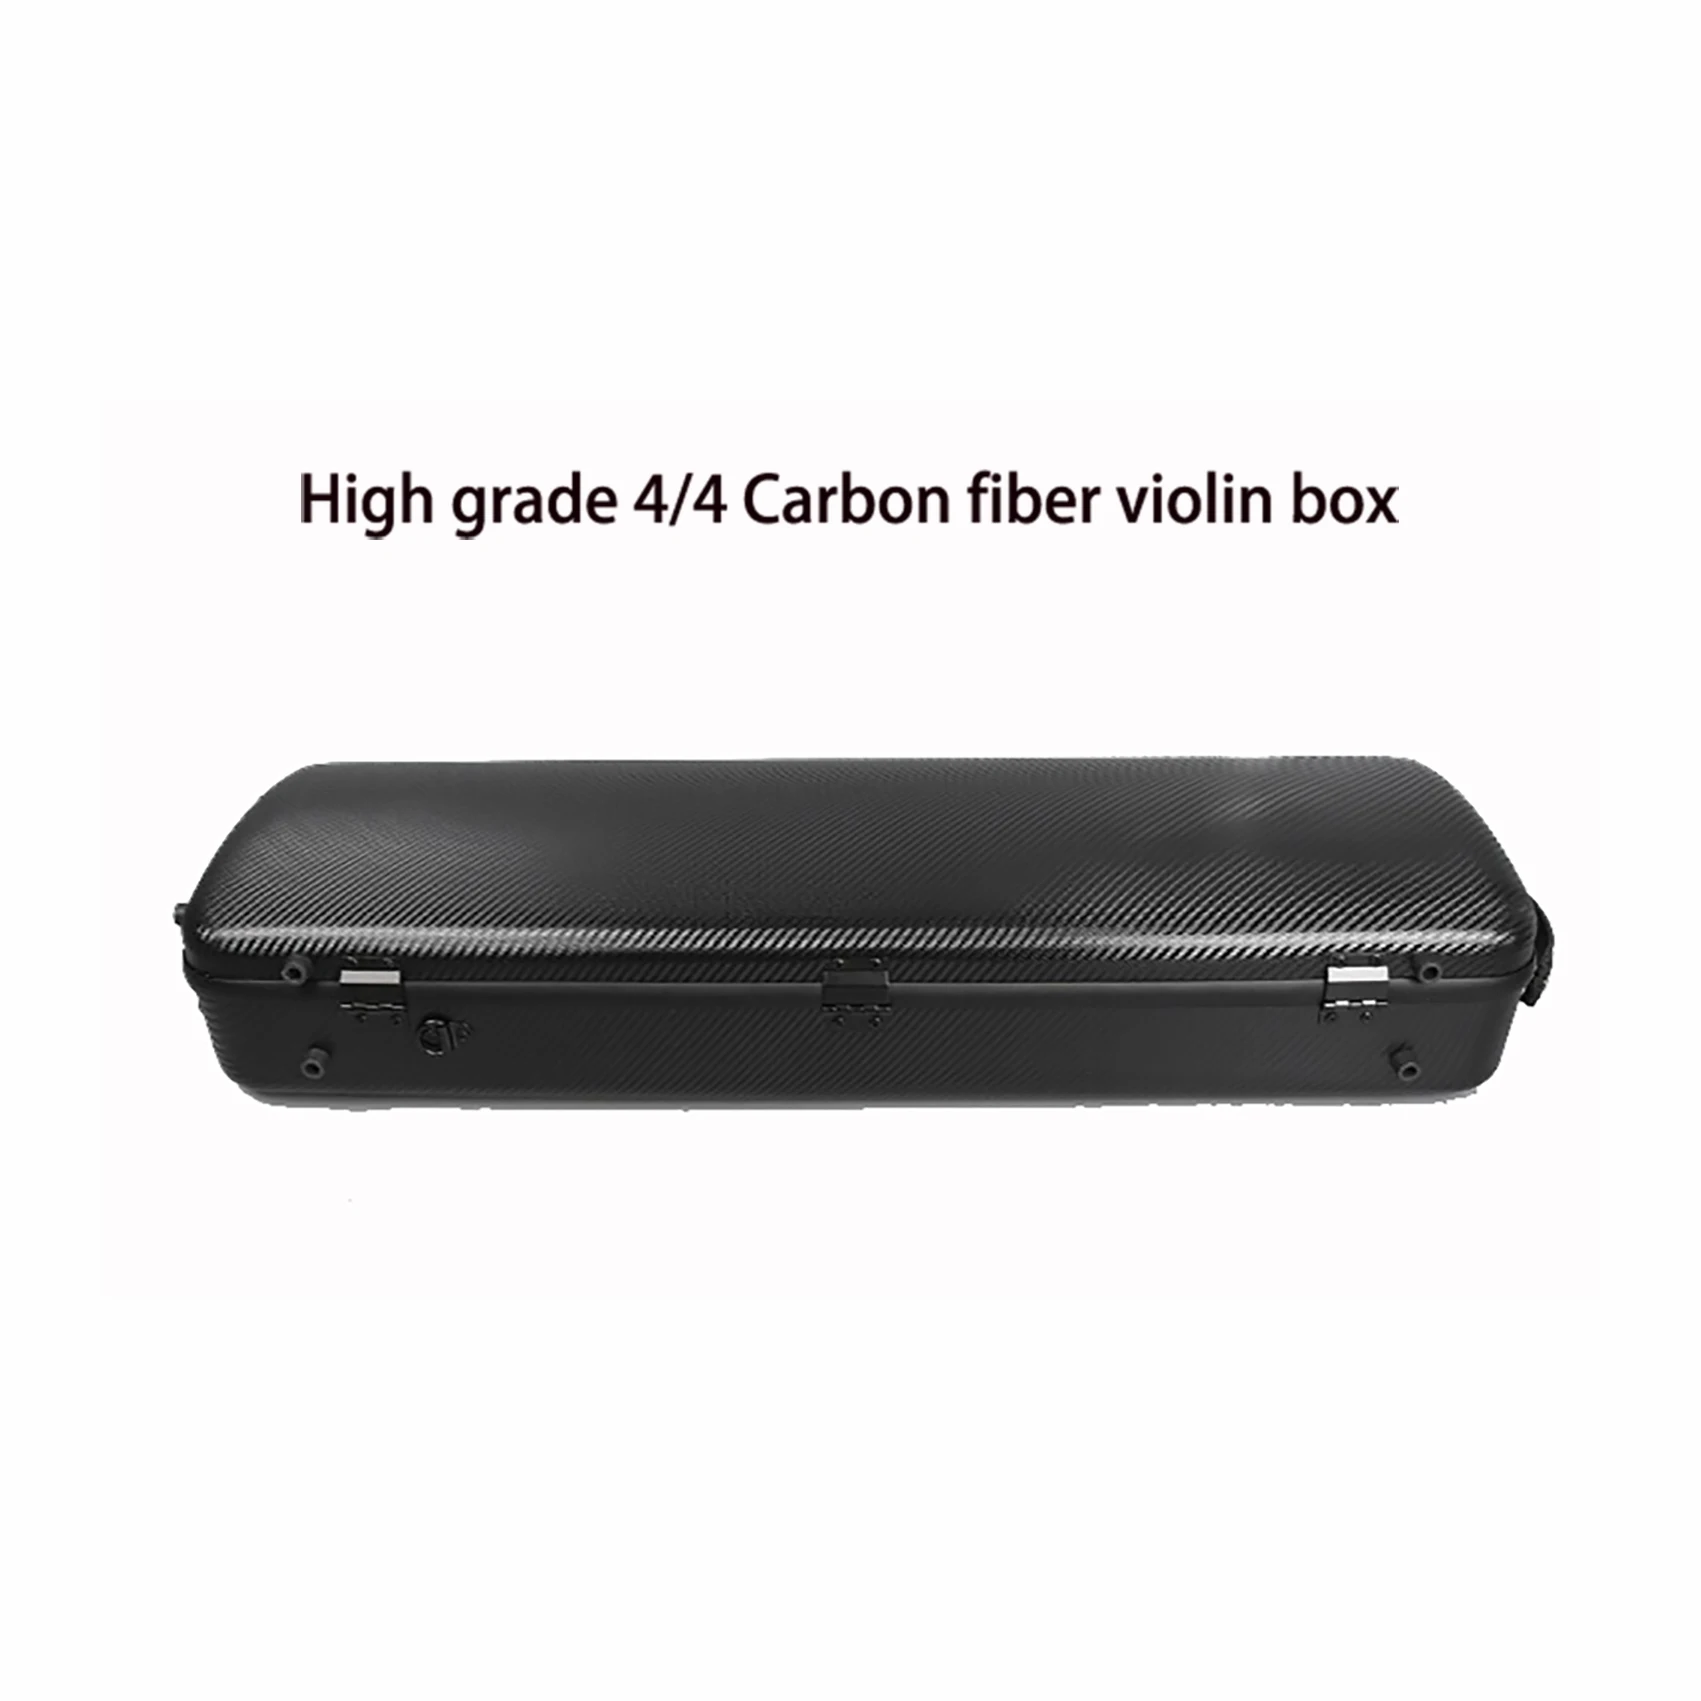 4/4 Violin Case Carbon Fiber Violin Box High Grade Black Square Box Strong Lock with Small bag enlarge